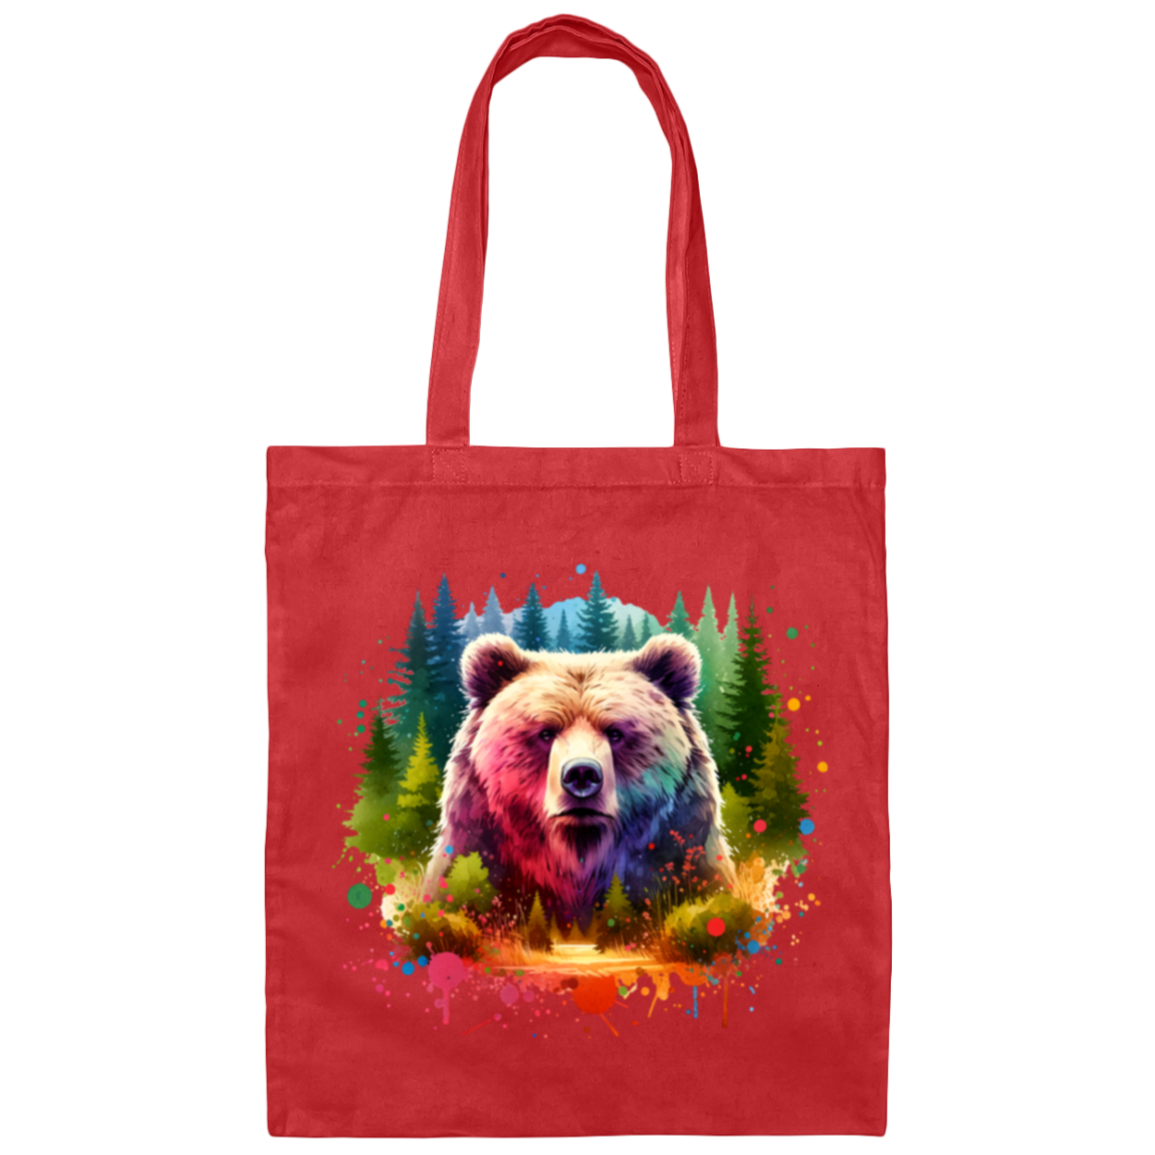 Grizzly Bear Portrait - Canvas Tote Bag